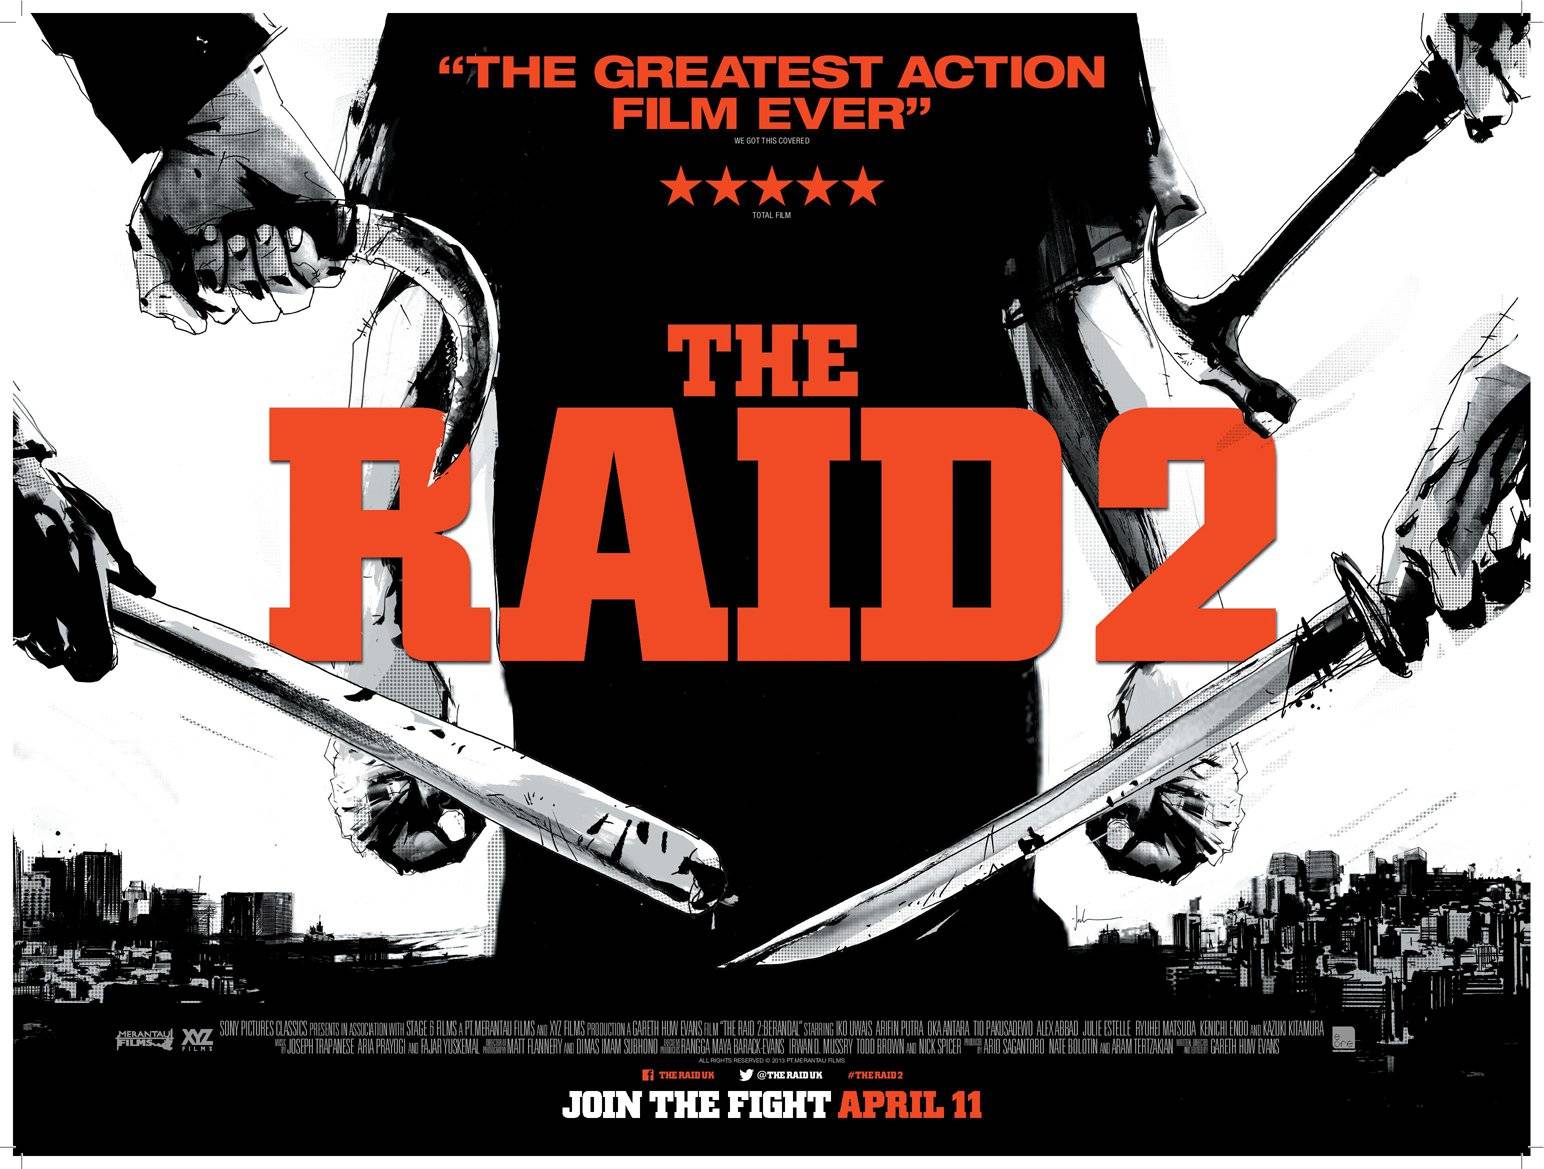 The Raid 2 / The Raid 2 (2014)